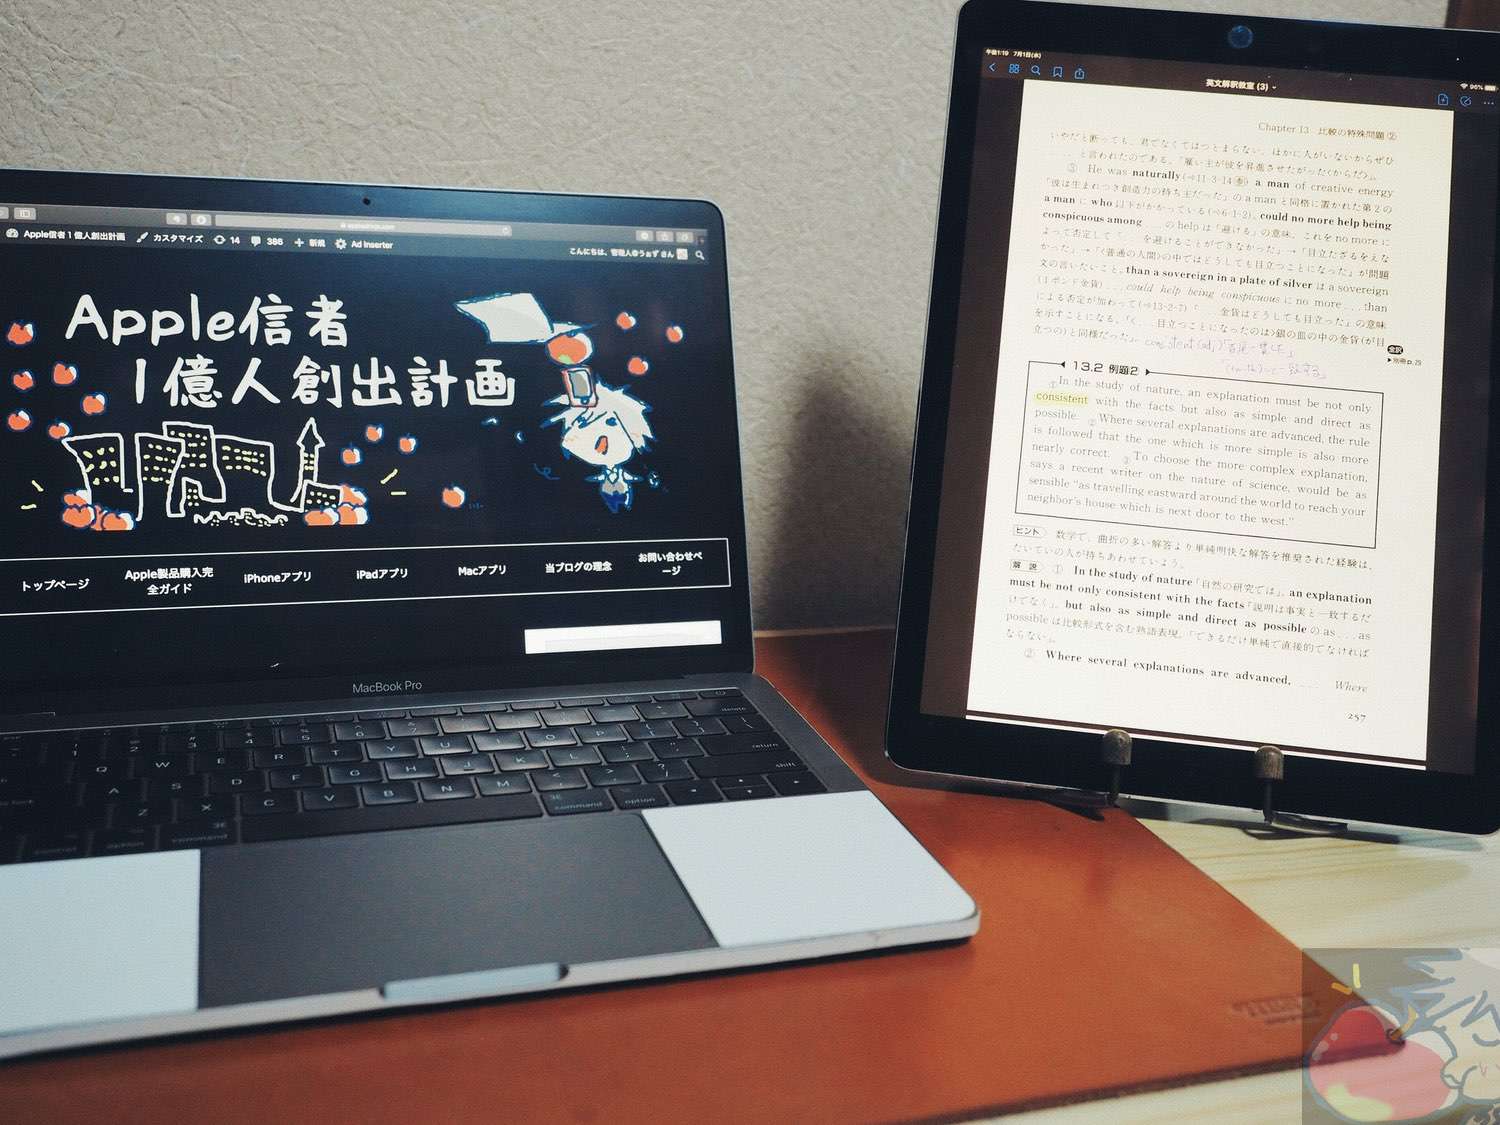 【Appleデビュー】MacbookPro & iPad のセット